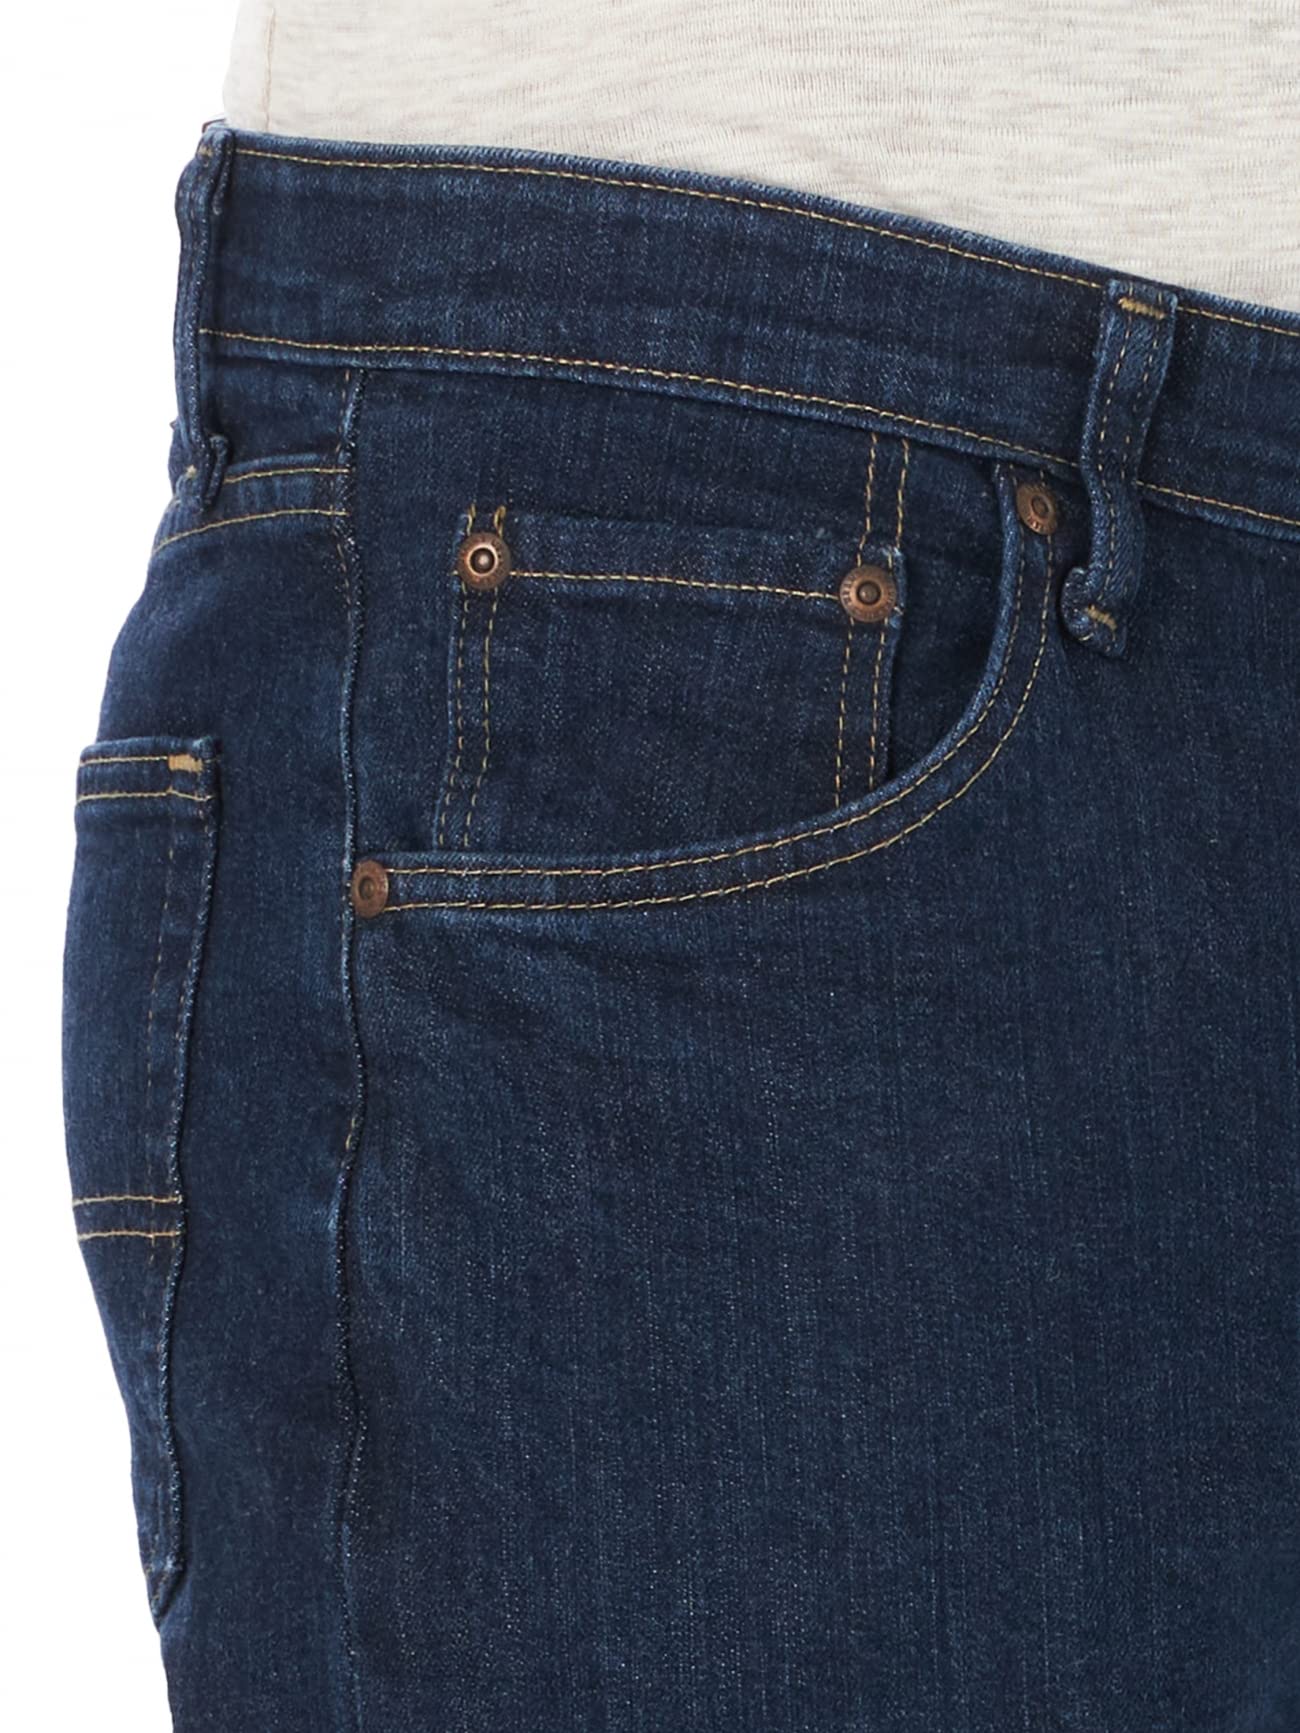 Wrangler Authentics Men's Regular Fit Comfort Flex Waist Jean, Dark Indigo, 36W x 30L